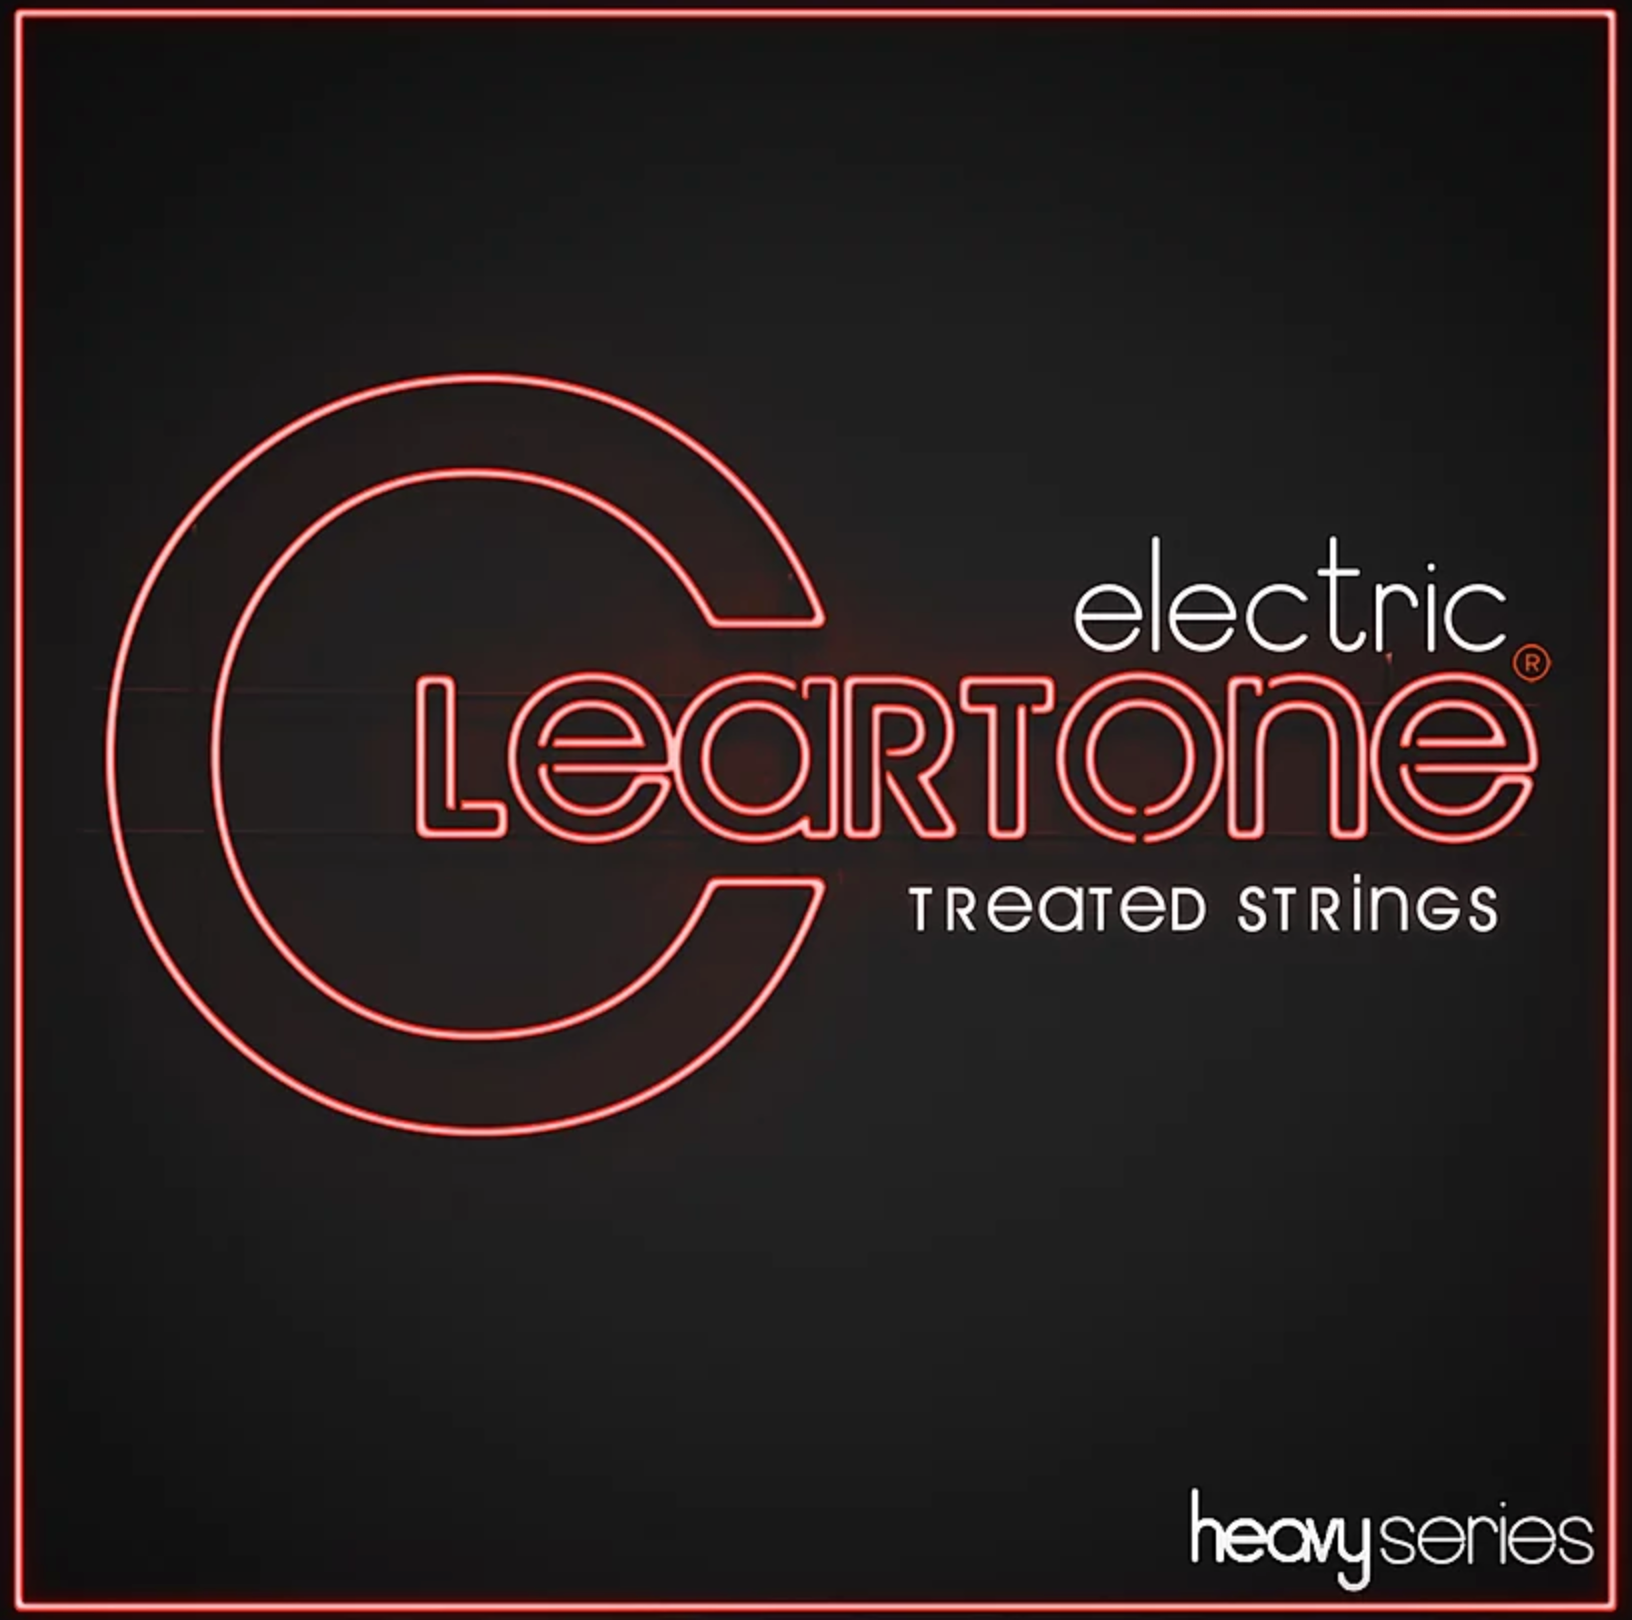 Cleartone Strings 9480 Heavy Series Monster Drop A Gauge: 14-80